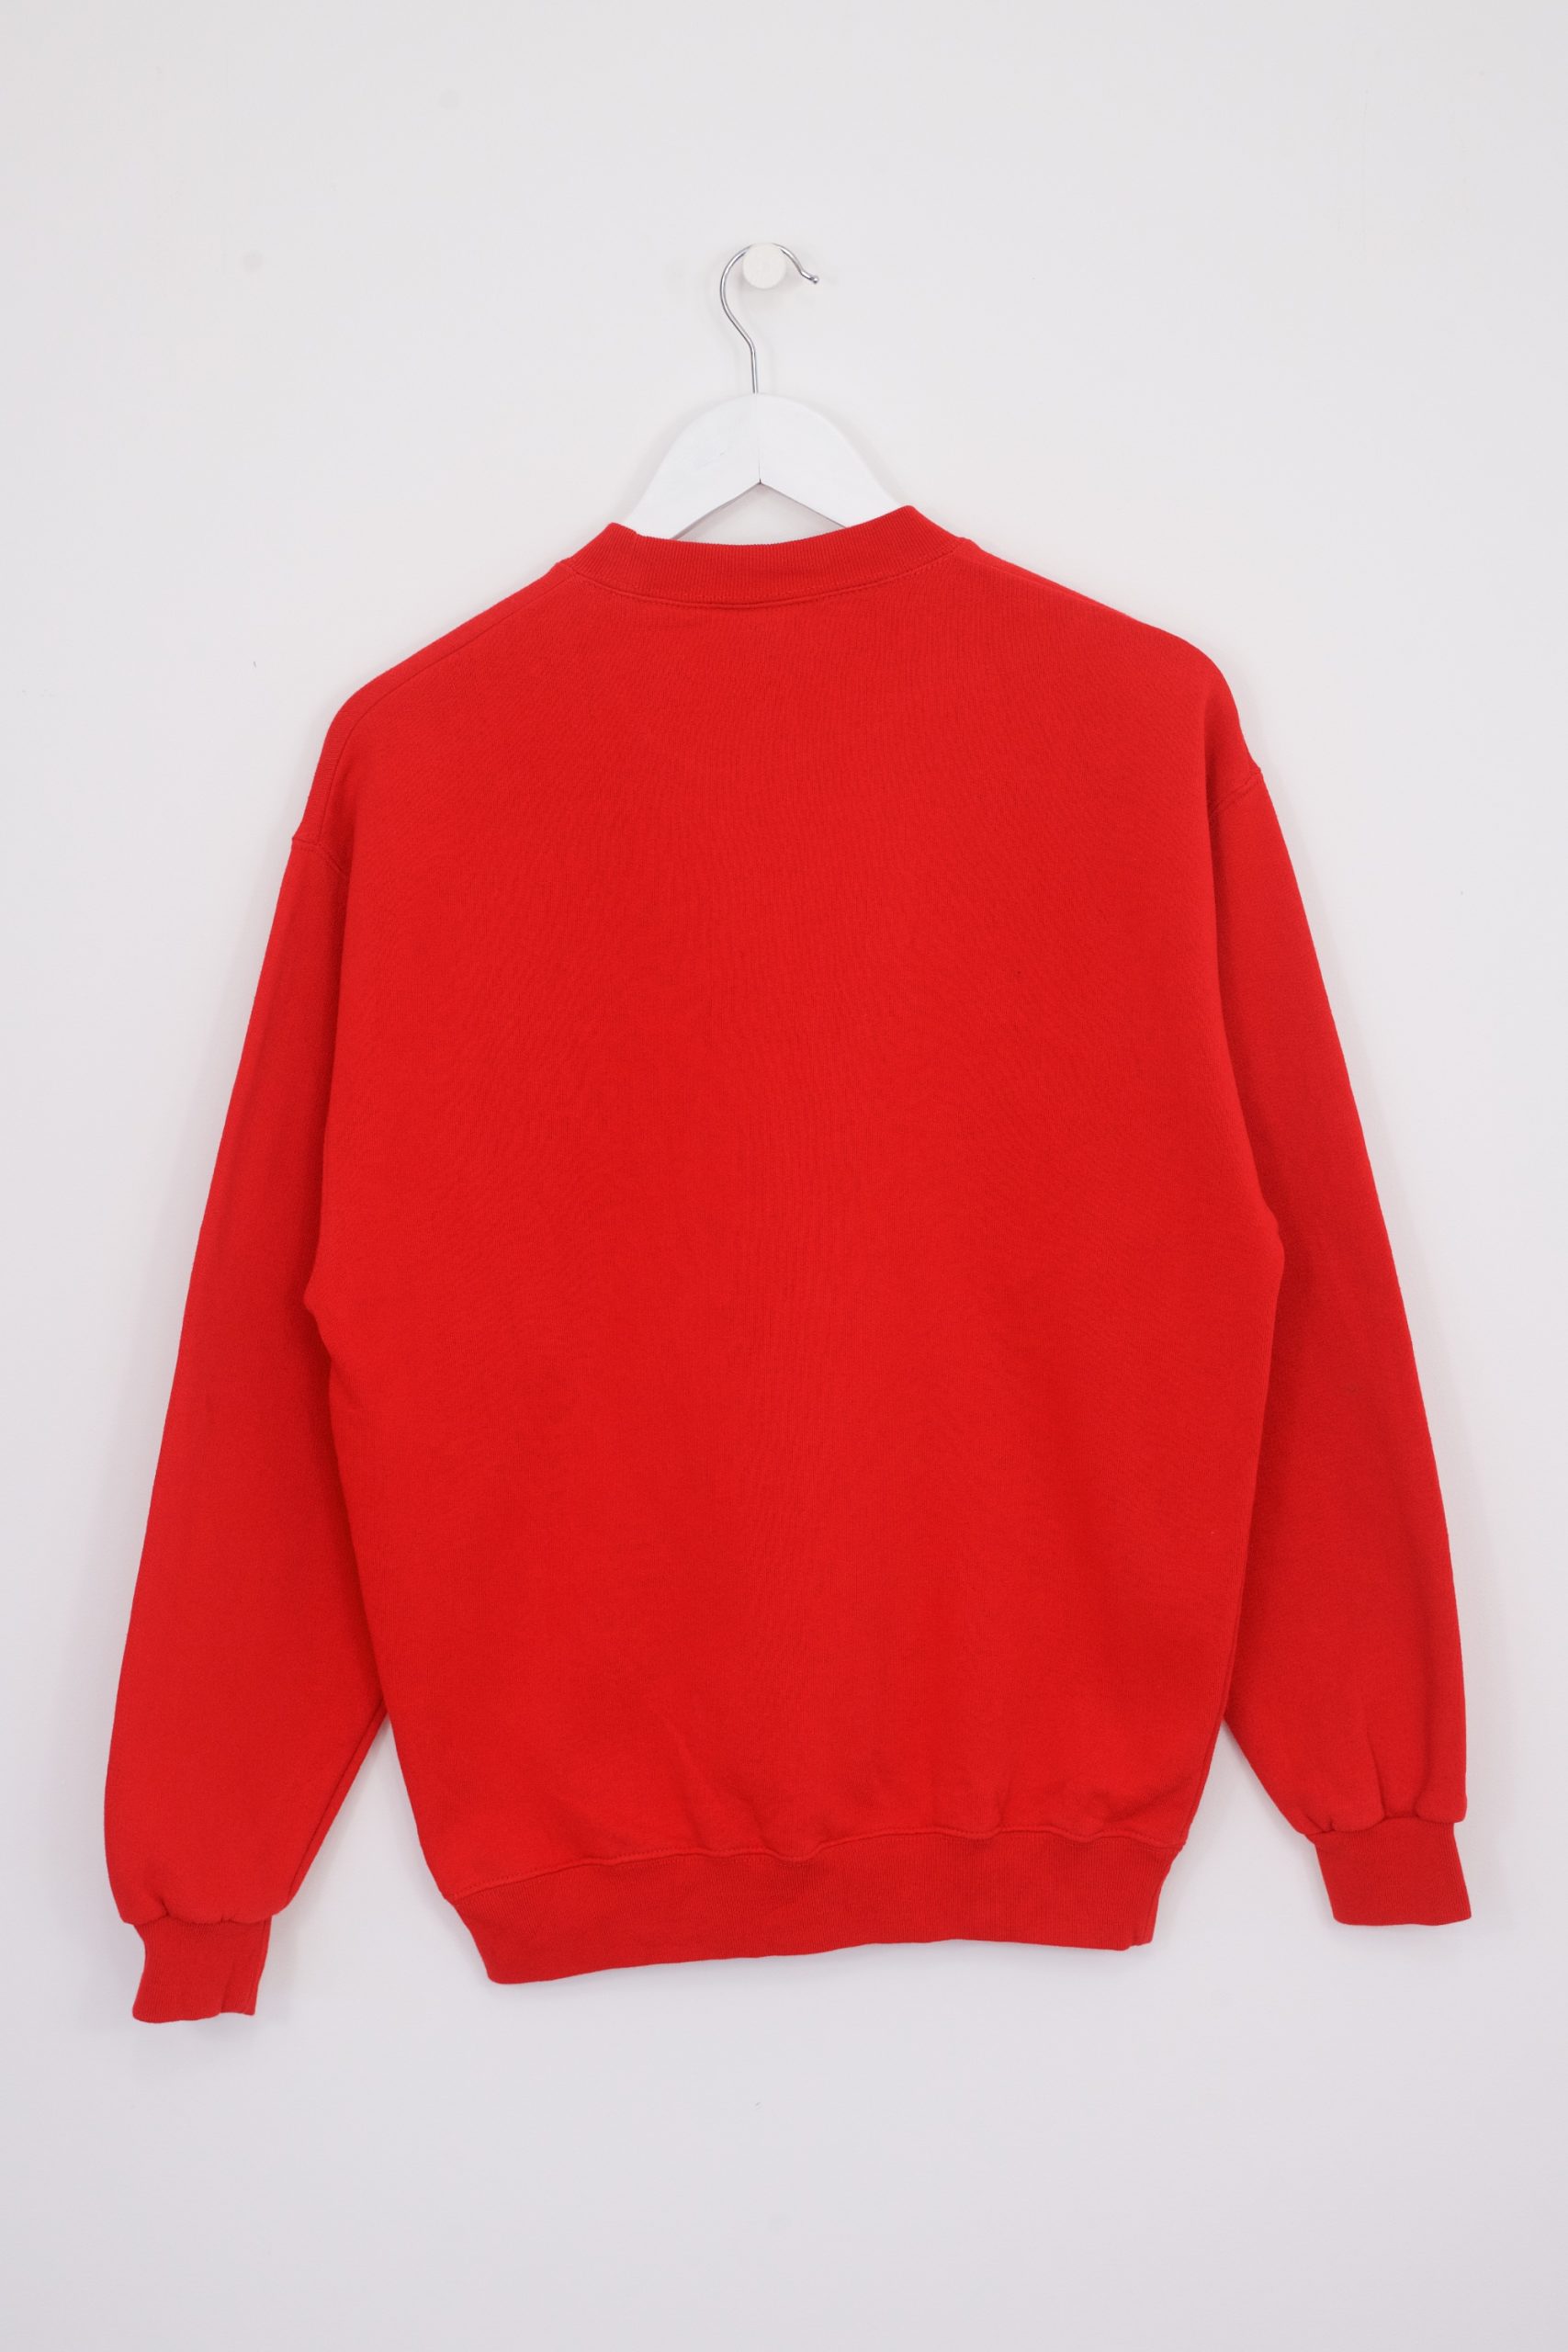 Disneyworld Vintage Christmas Sweater | Save the Children Shop